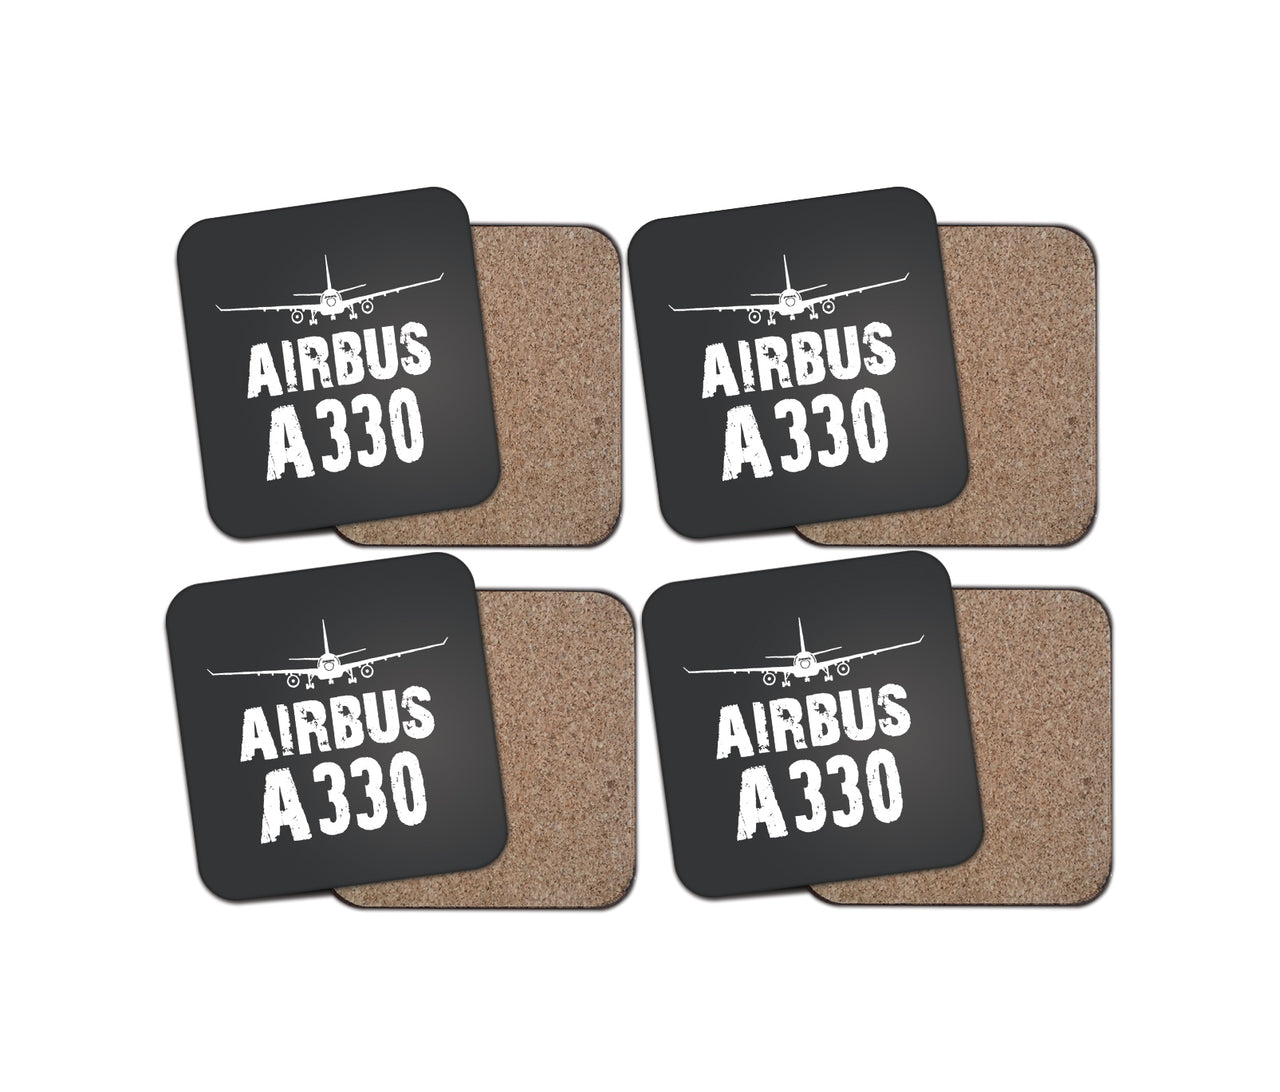 Airbus A330 & Plane Designed Coasters